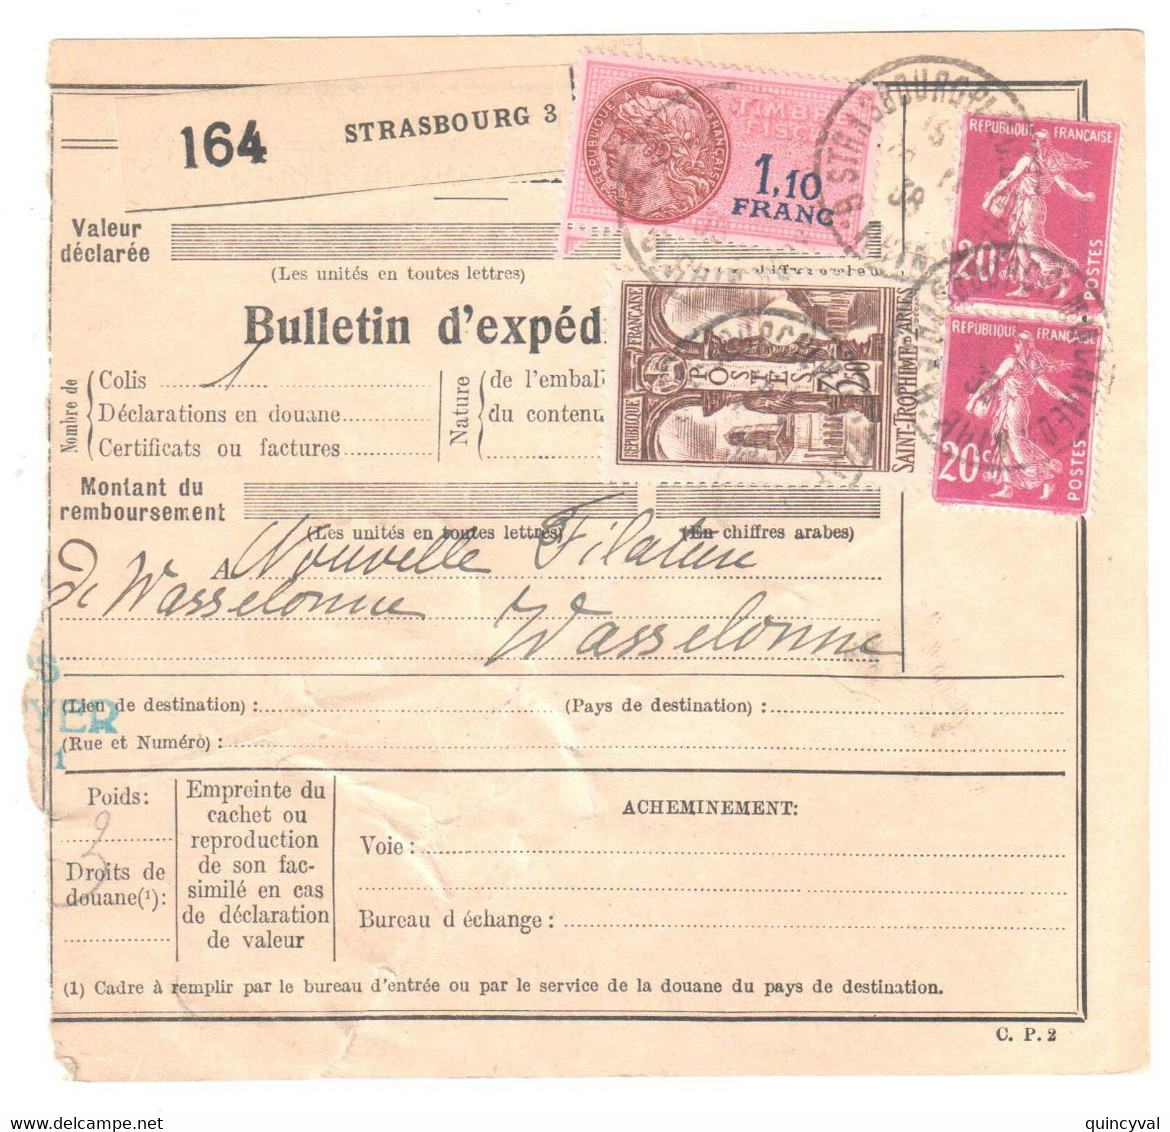 STRASBOURG Bas Rhin Bulletin D'expédition Alsace Lorraine 1938 3,50 F St Trophime 20c Semeuse Yv 302 139 - Briefe U. Dokumente